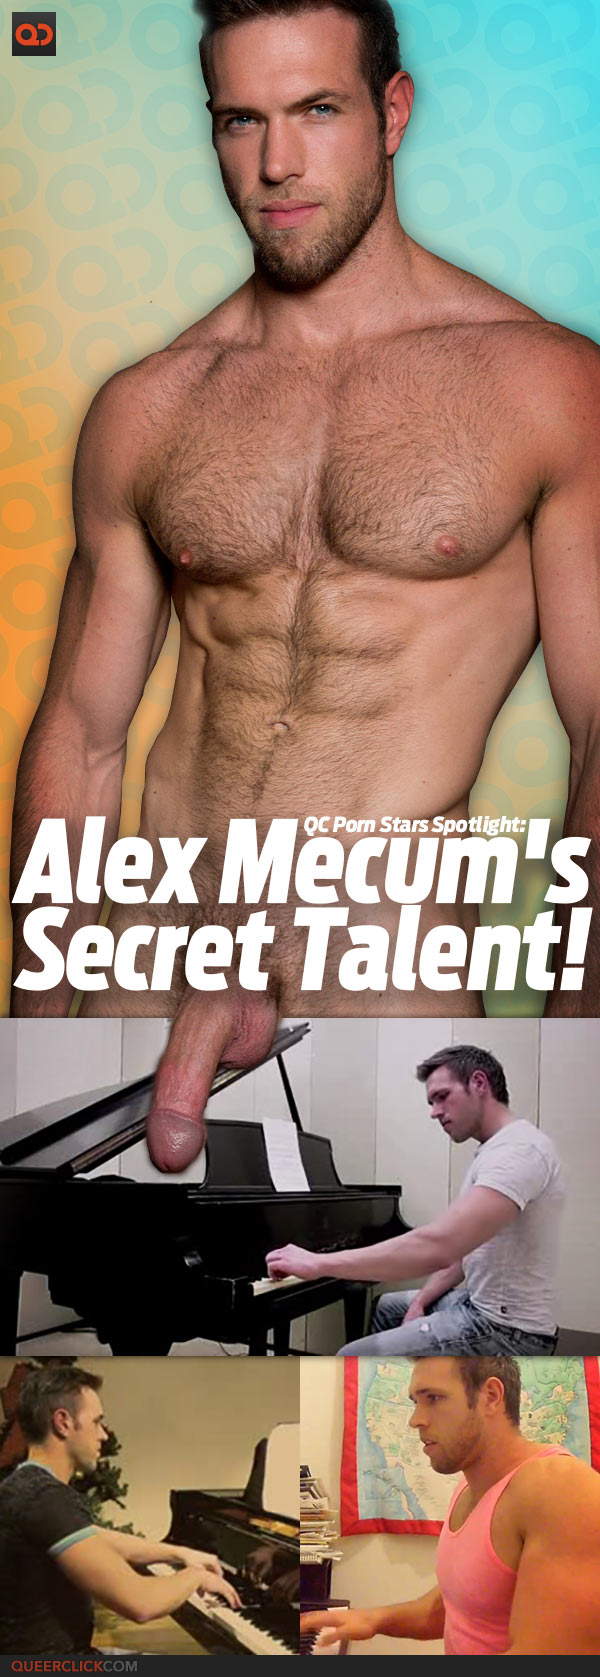 QC Porn Stars Spotlight: Alex Mecum Secret Talent!